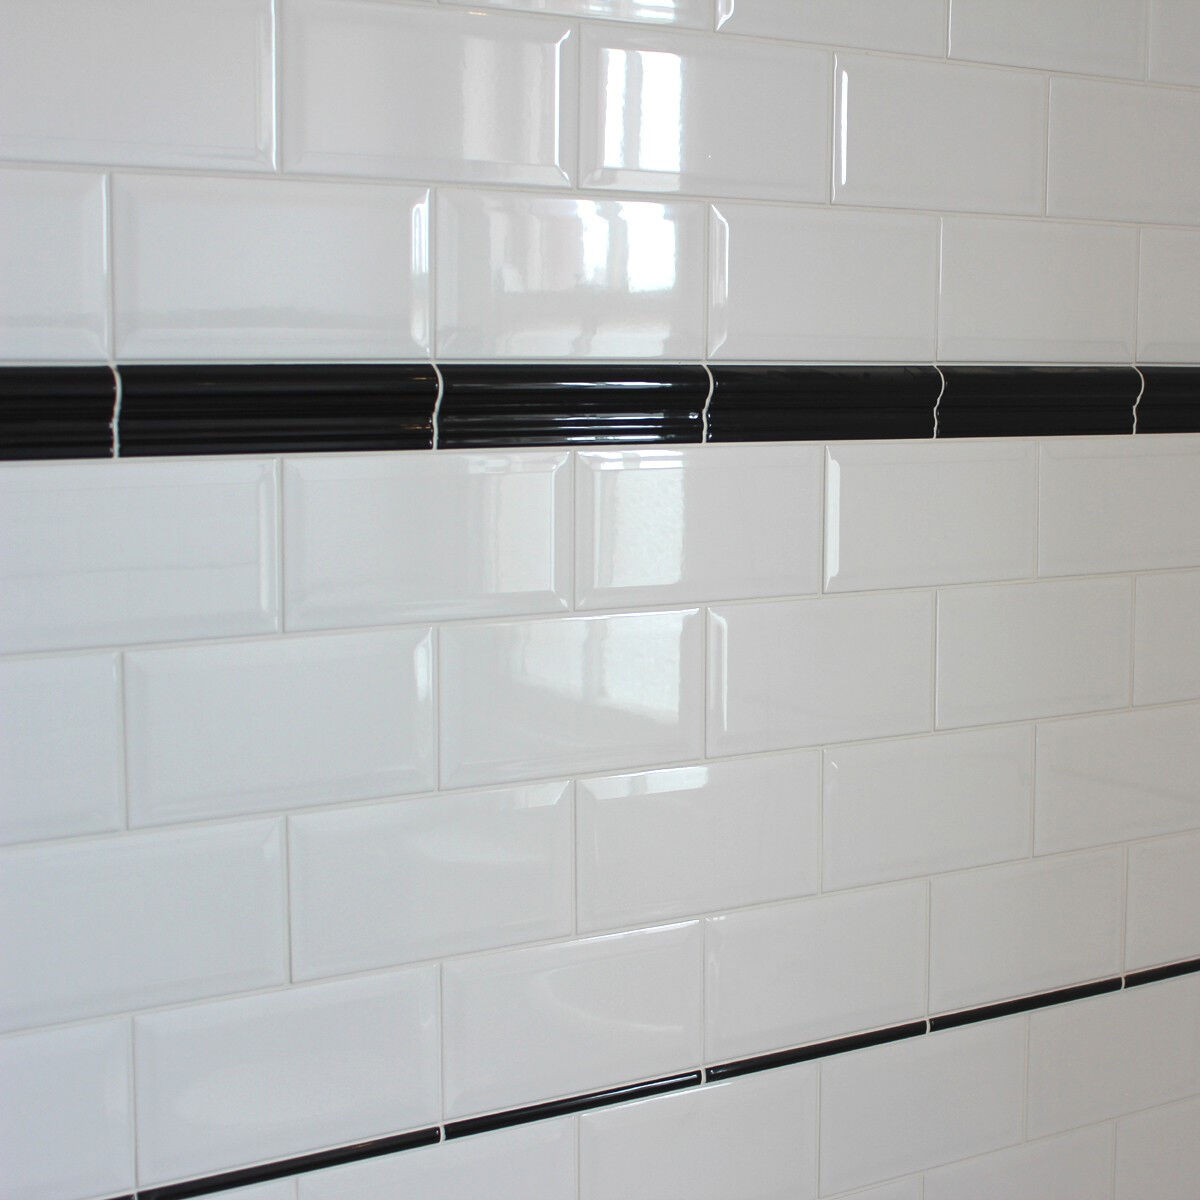 Kitchen Ceramic Wall Tiles
 GLOSS WHITE METRO BEVELLED BRICK KITCHEN CERAMIC WALL